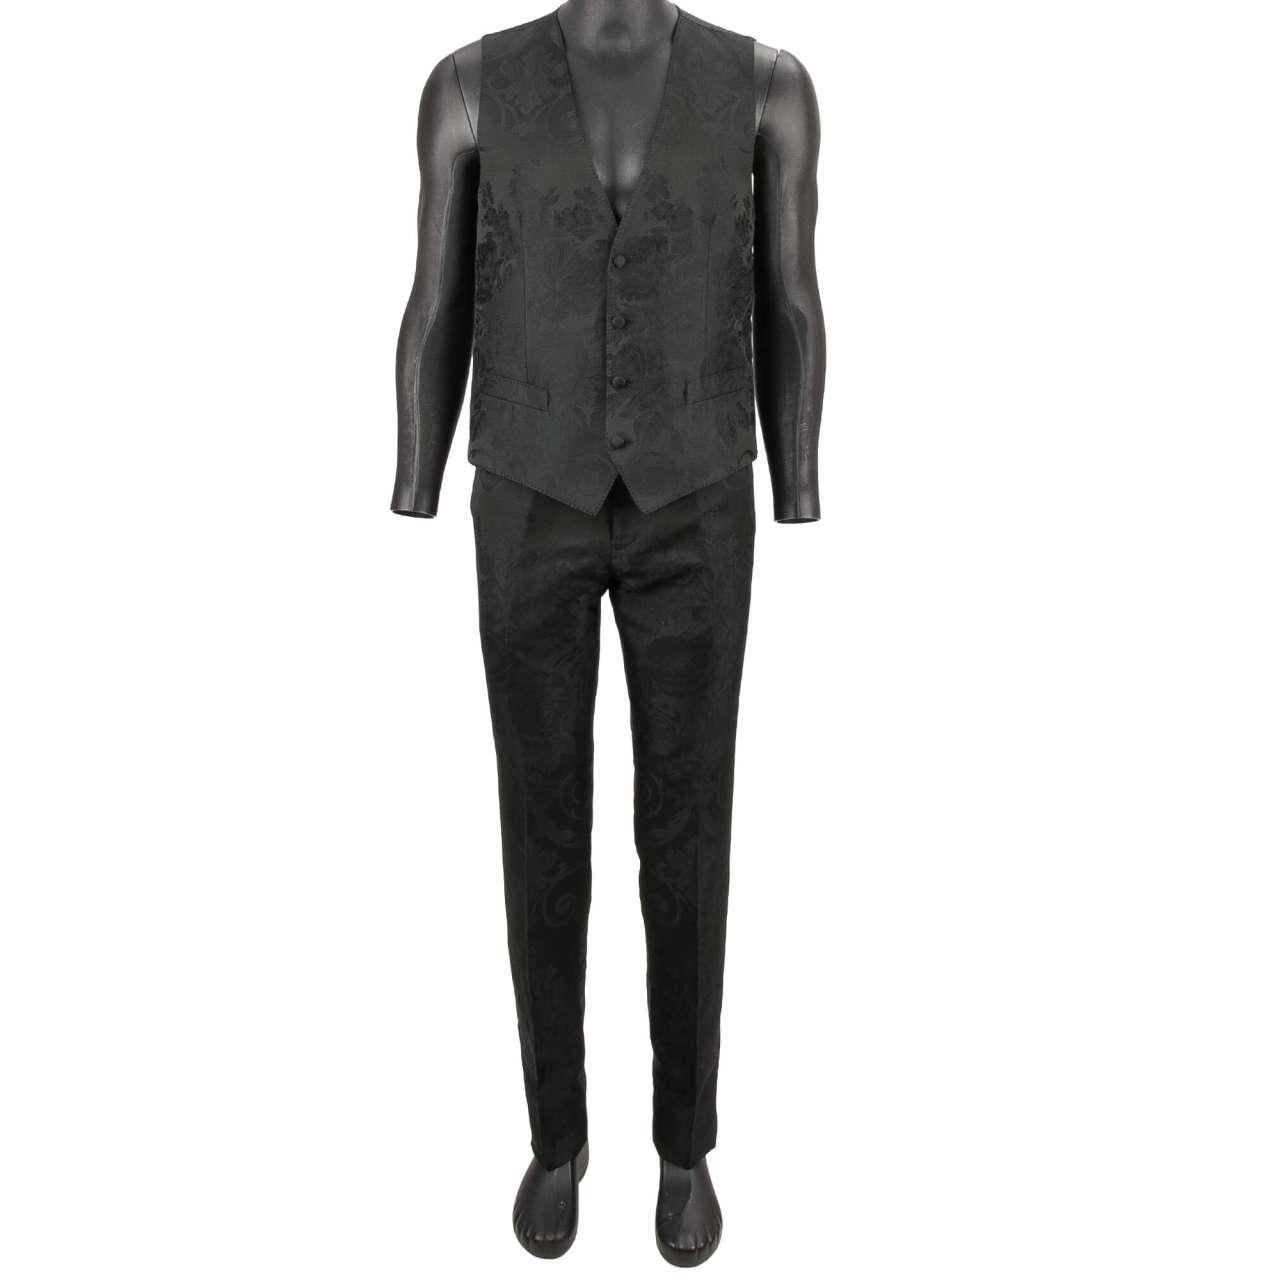 D&G Baroque 3 Piece Jacquard Suit Jacket Waistcoat MARTINI White Black 54 For Sale 1